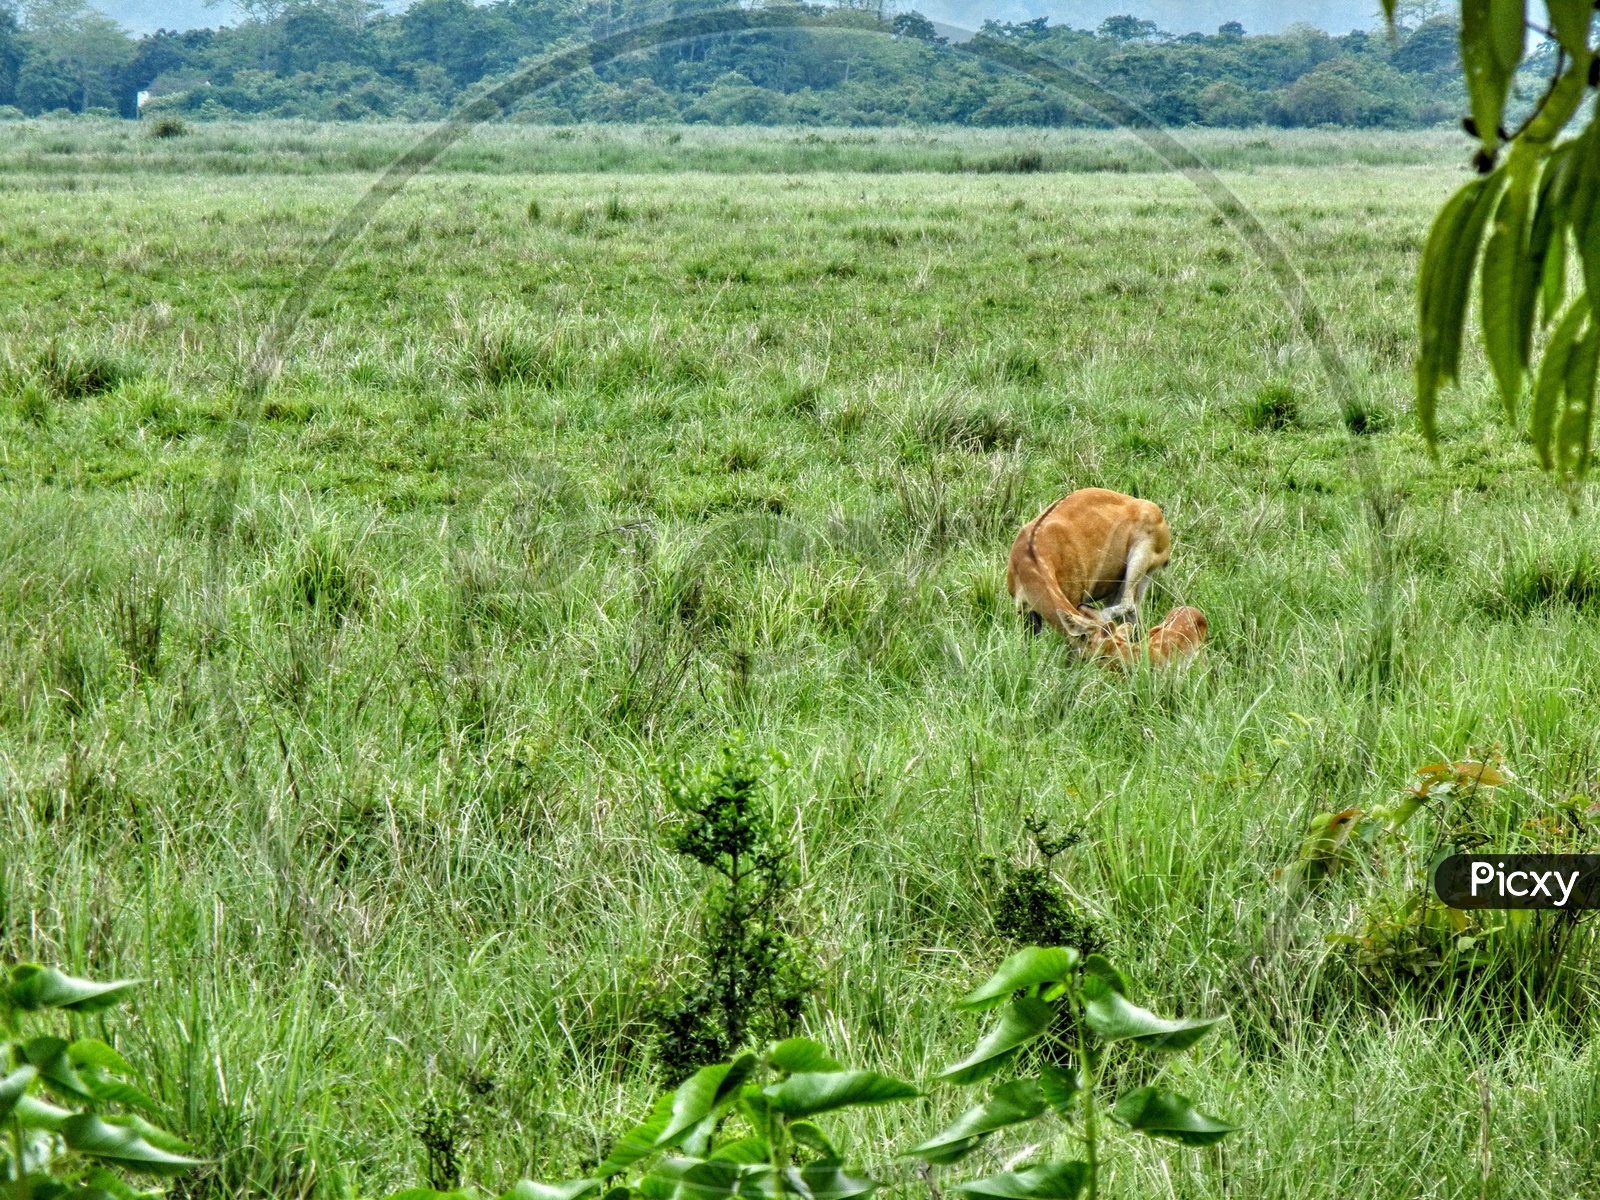 A pair of eastern swamp deer playing in the field.